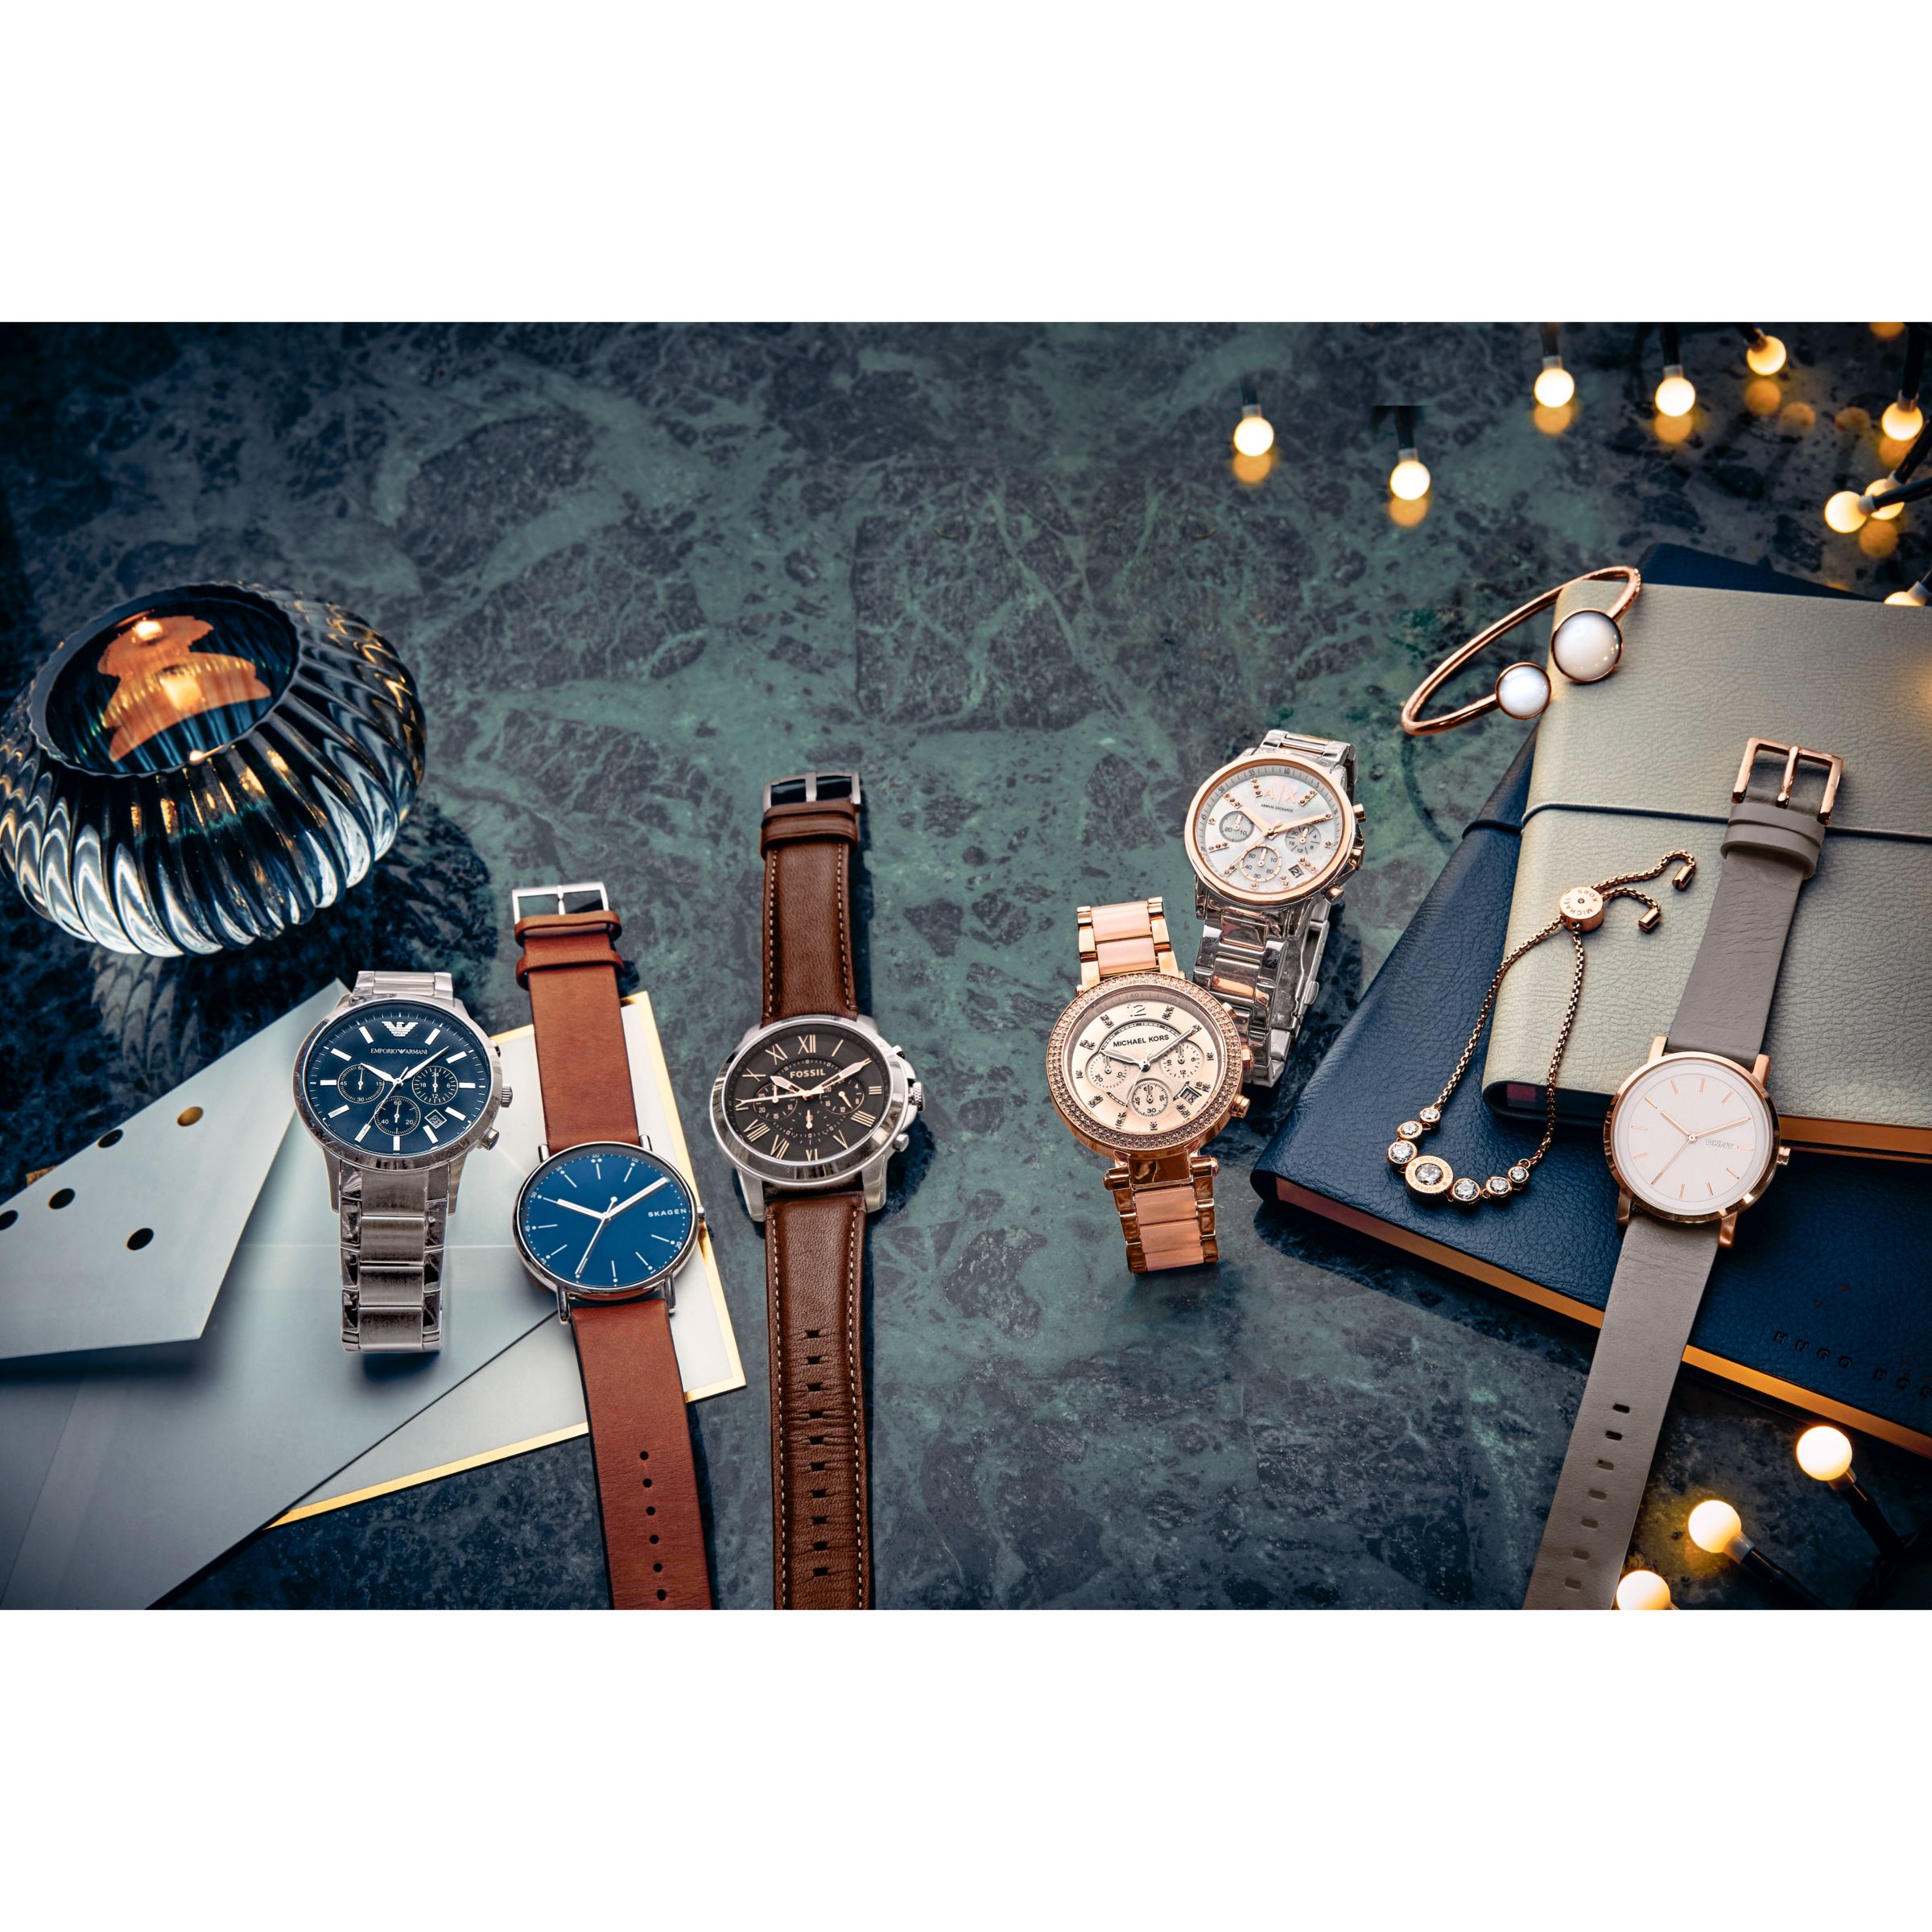 Buy Emporio Armani Men's Date Chronograph Bracelet Strap Watch Online at johnlewis.com